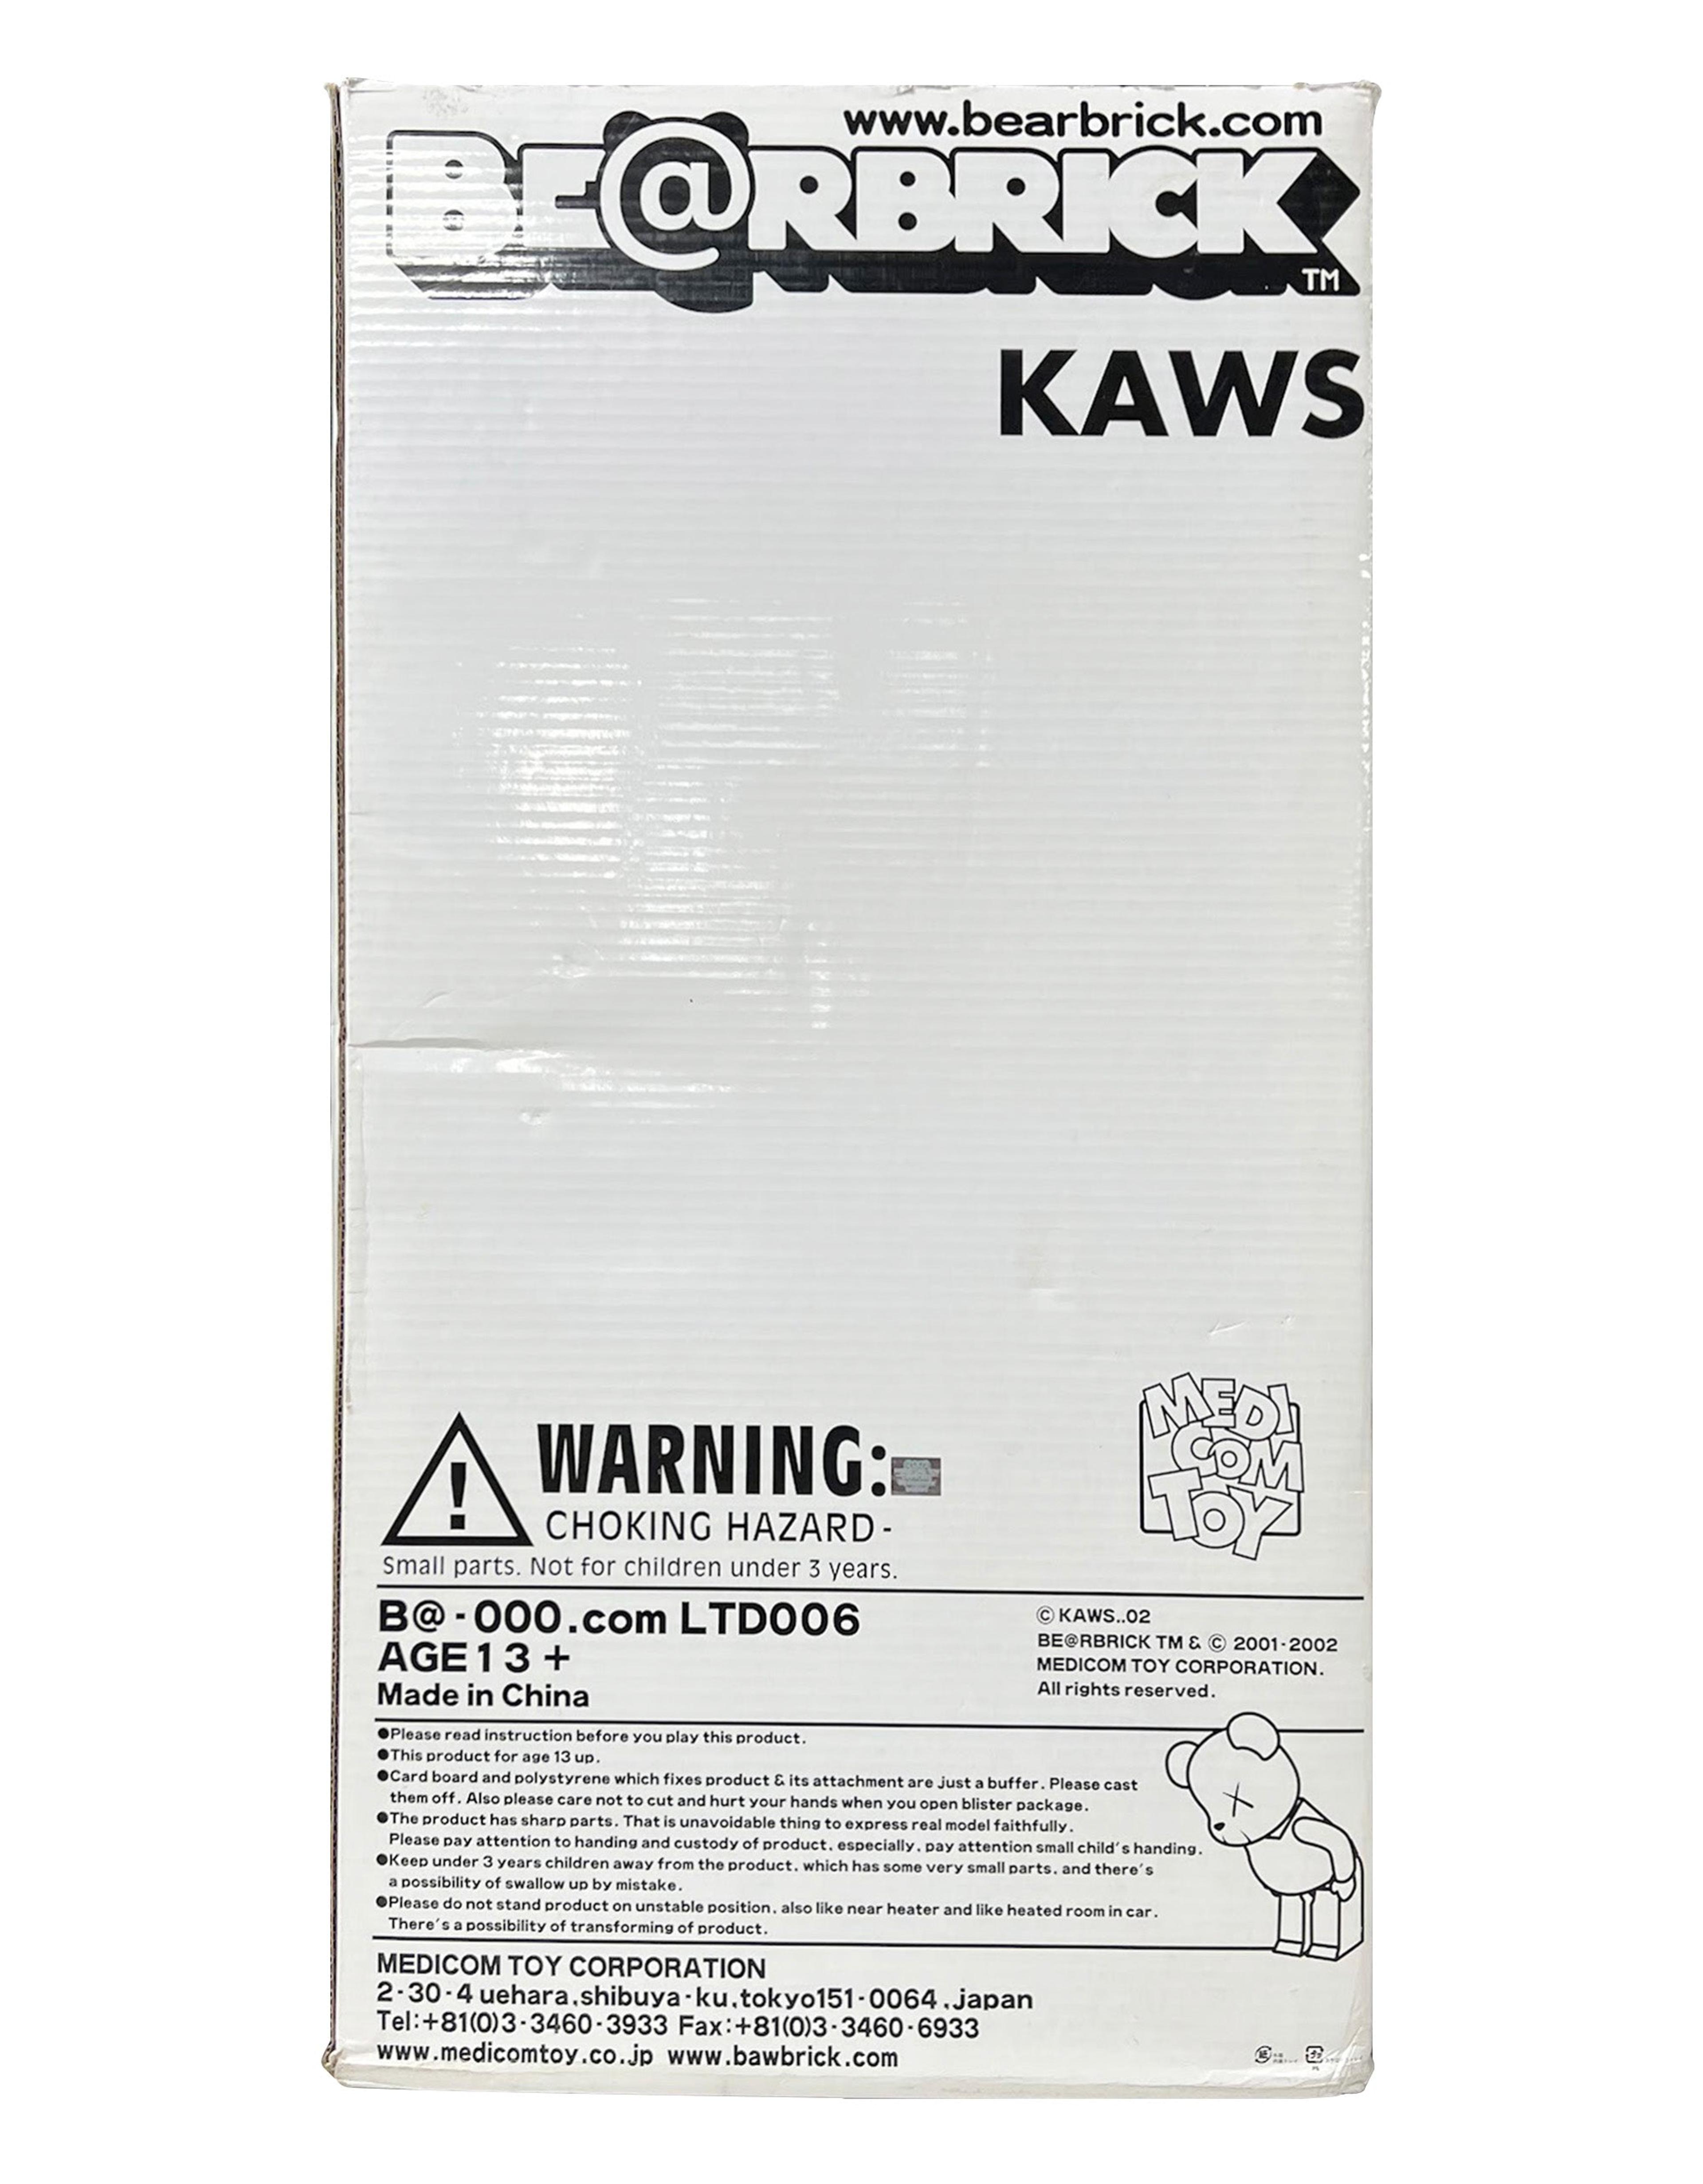 Alternate View 1 of KAWS - BE@RBRICK Companion Grey, 2006 1000%